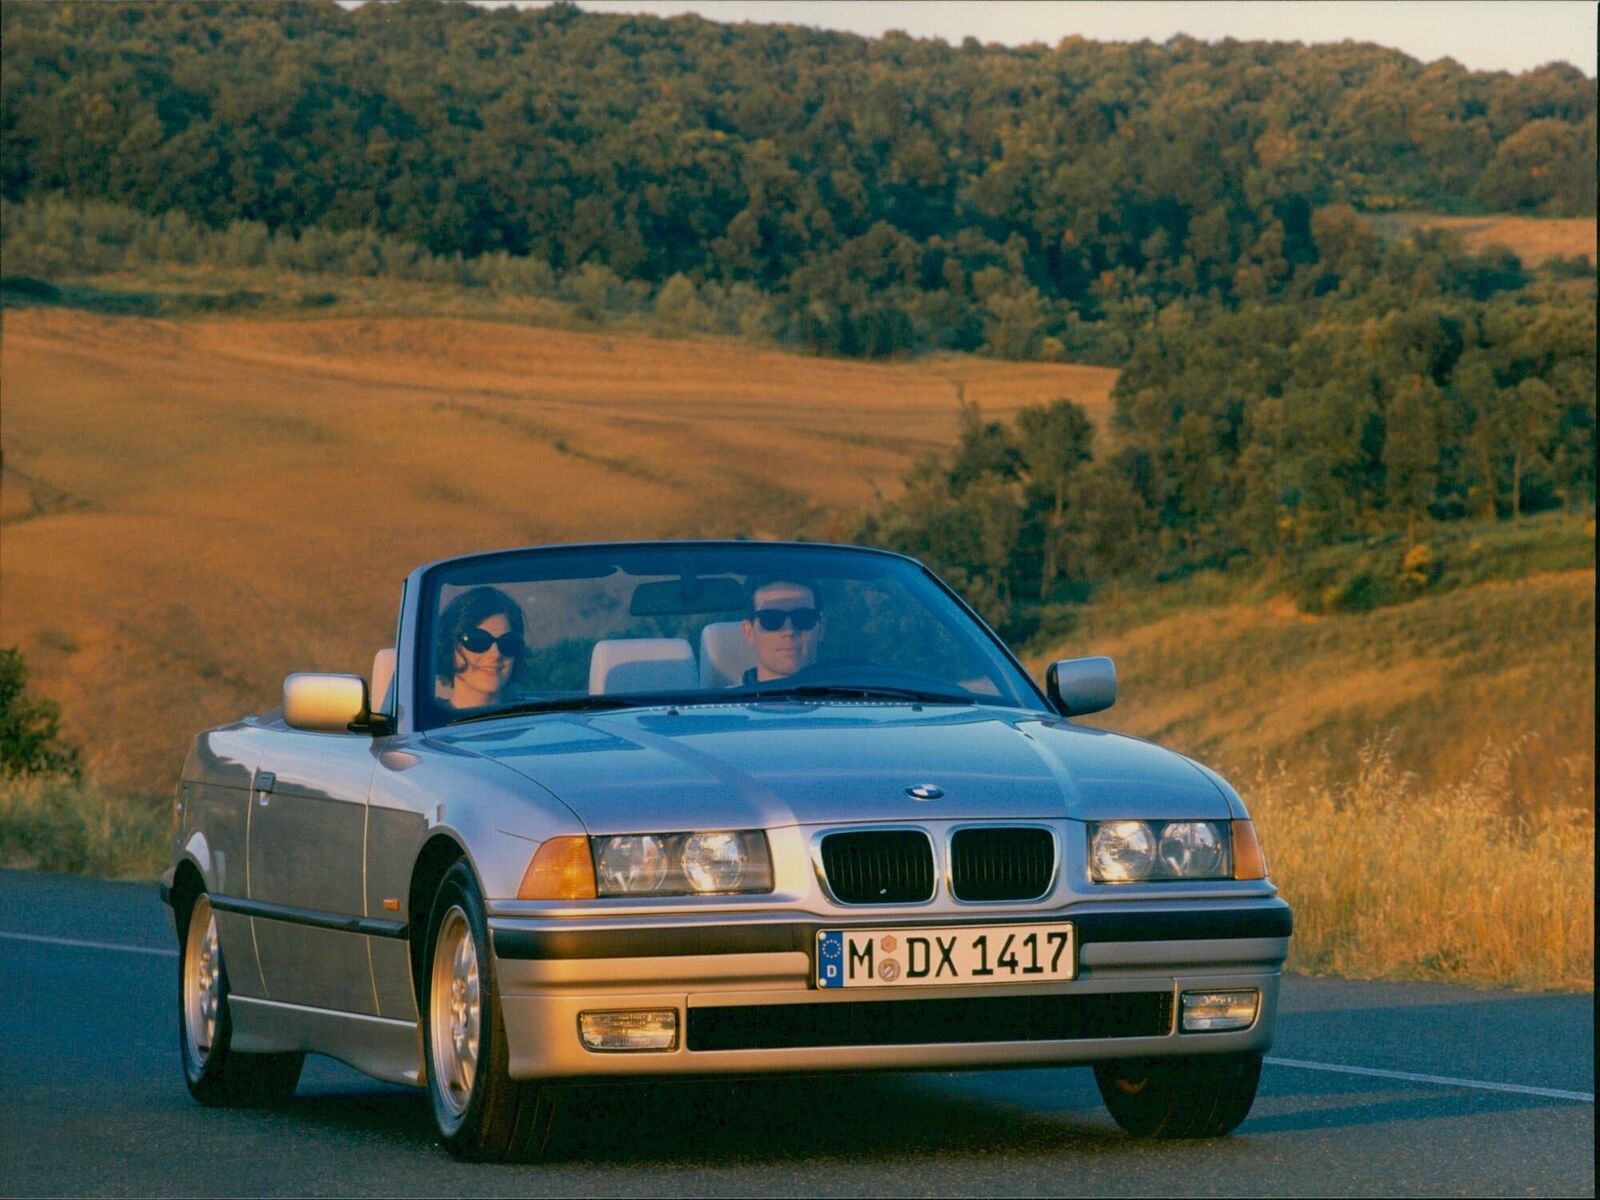 1997 BMW 3 Series convertible - Vintage Photograph 3454025